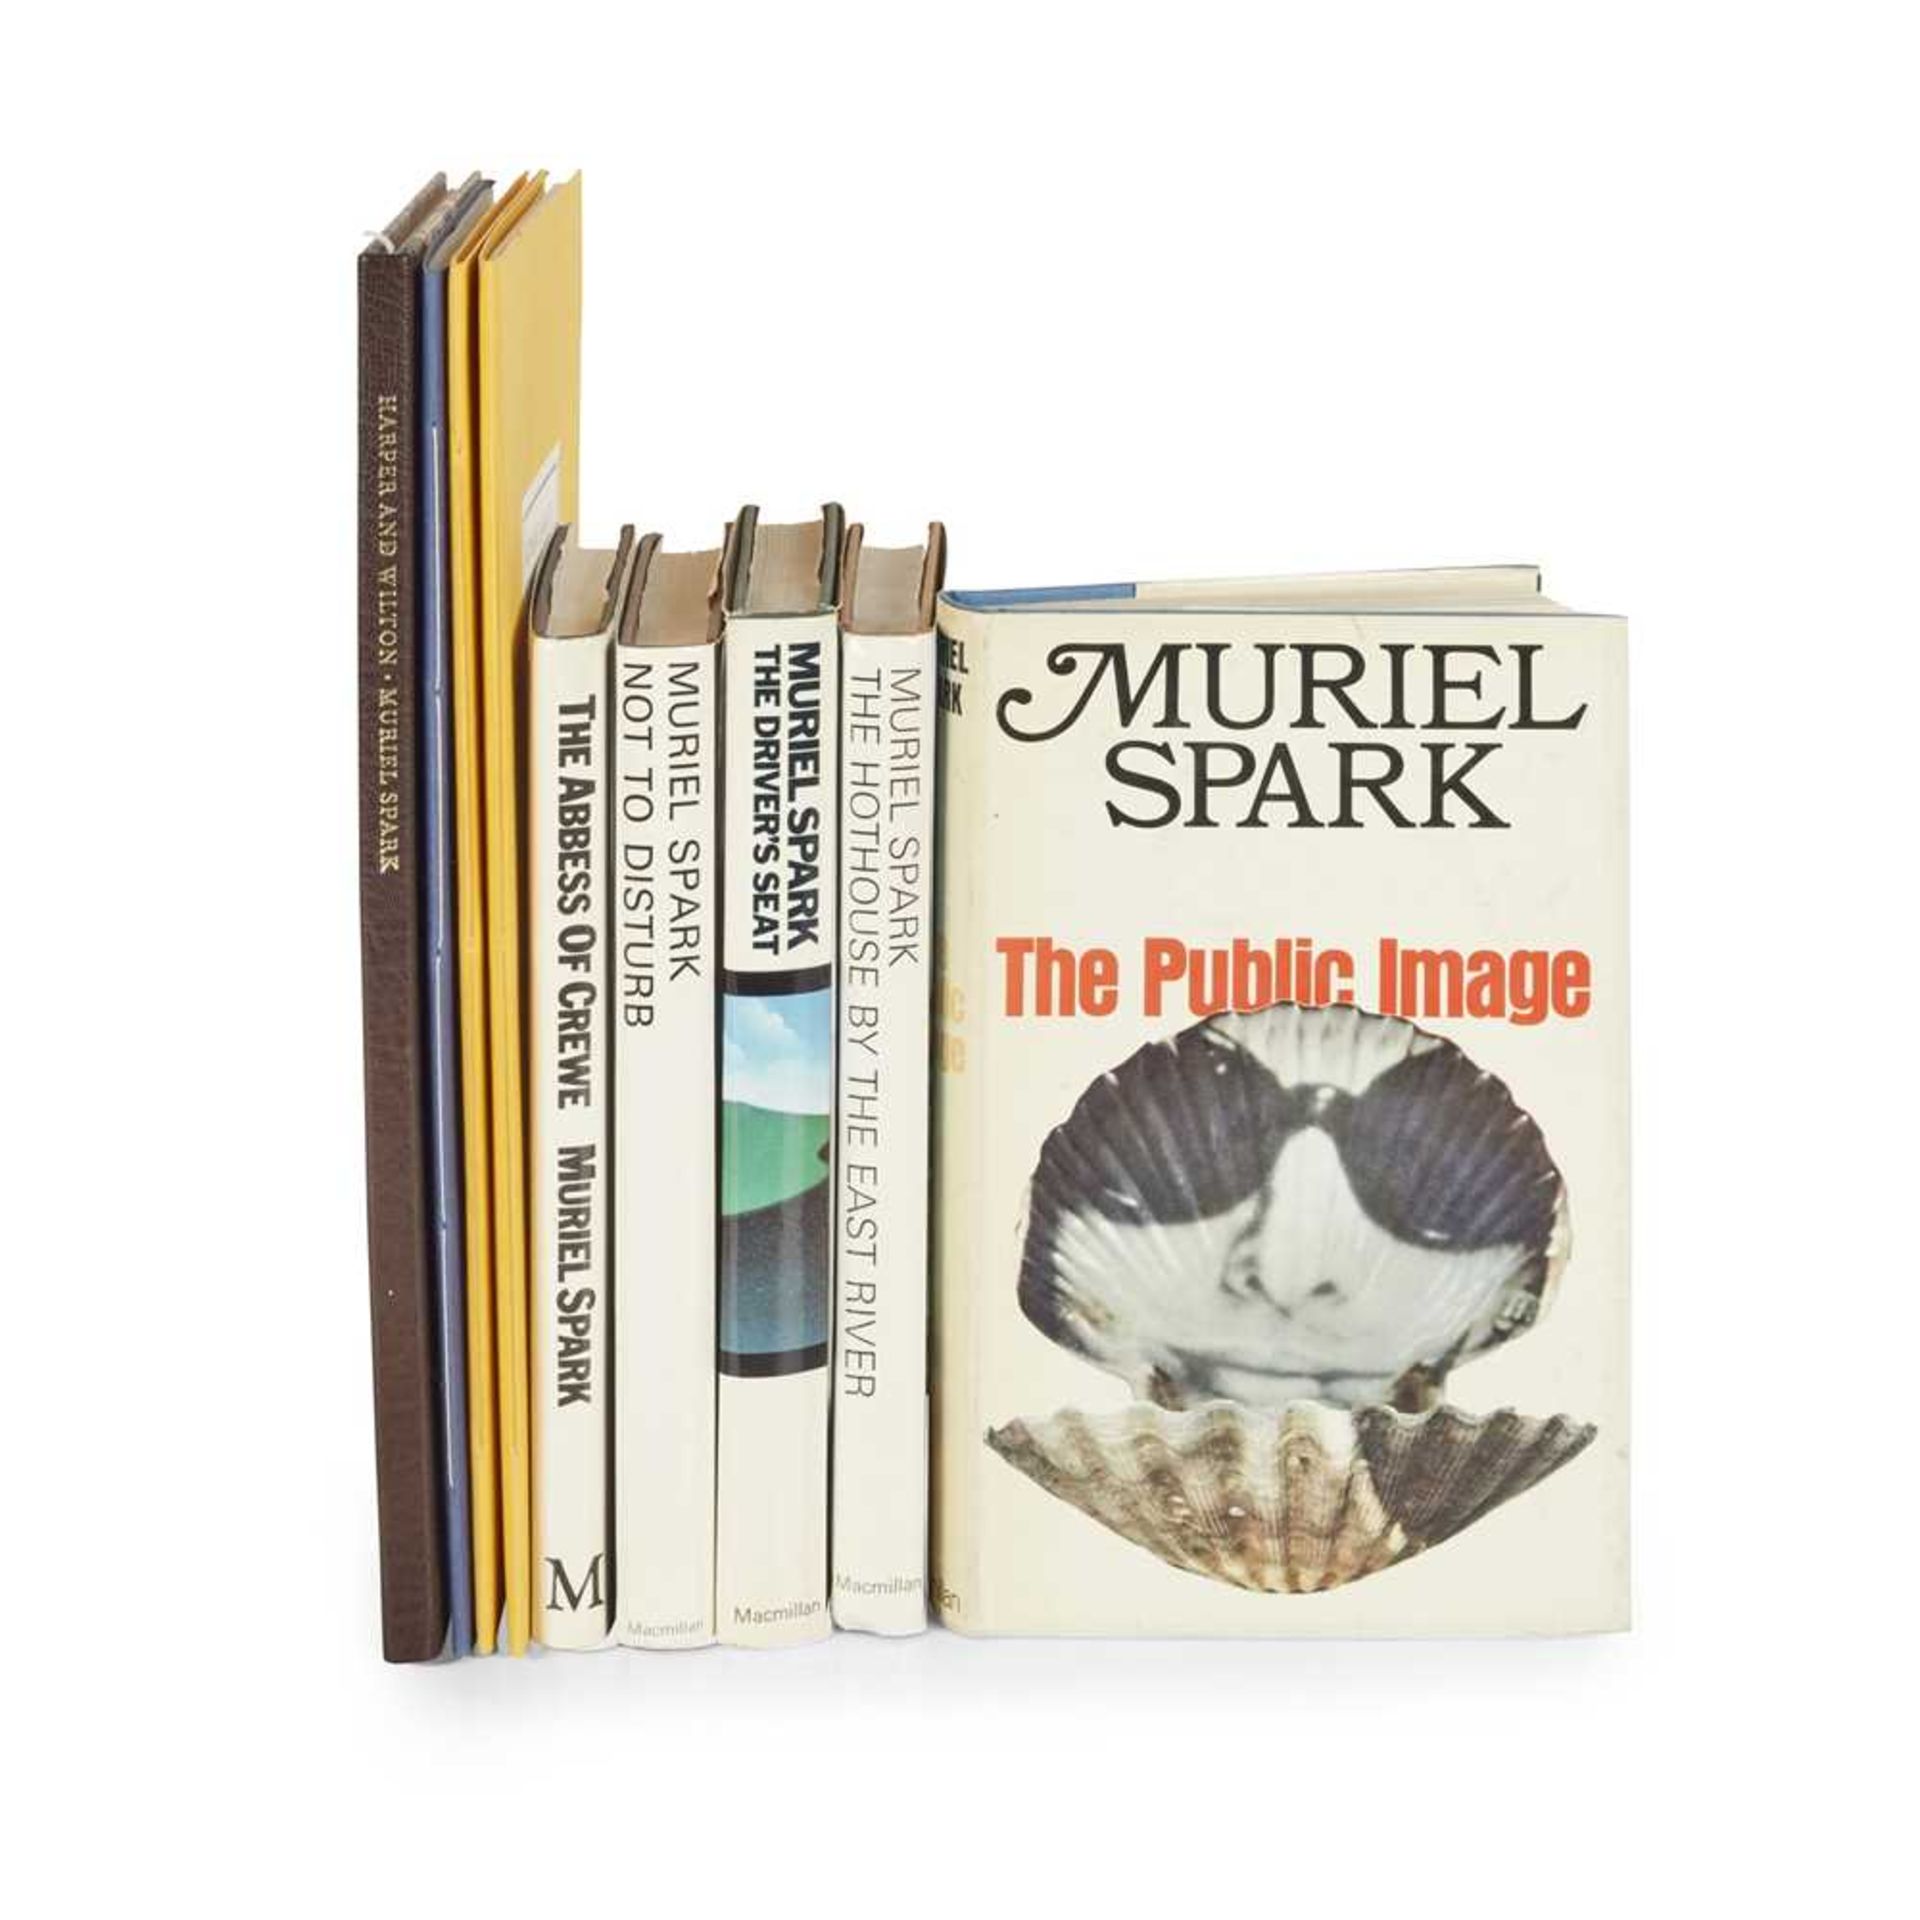 Spark, Muriel 11 volumes, 5 signed, comprising